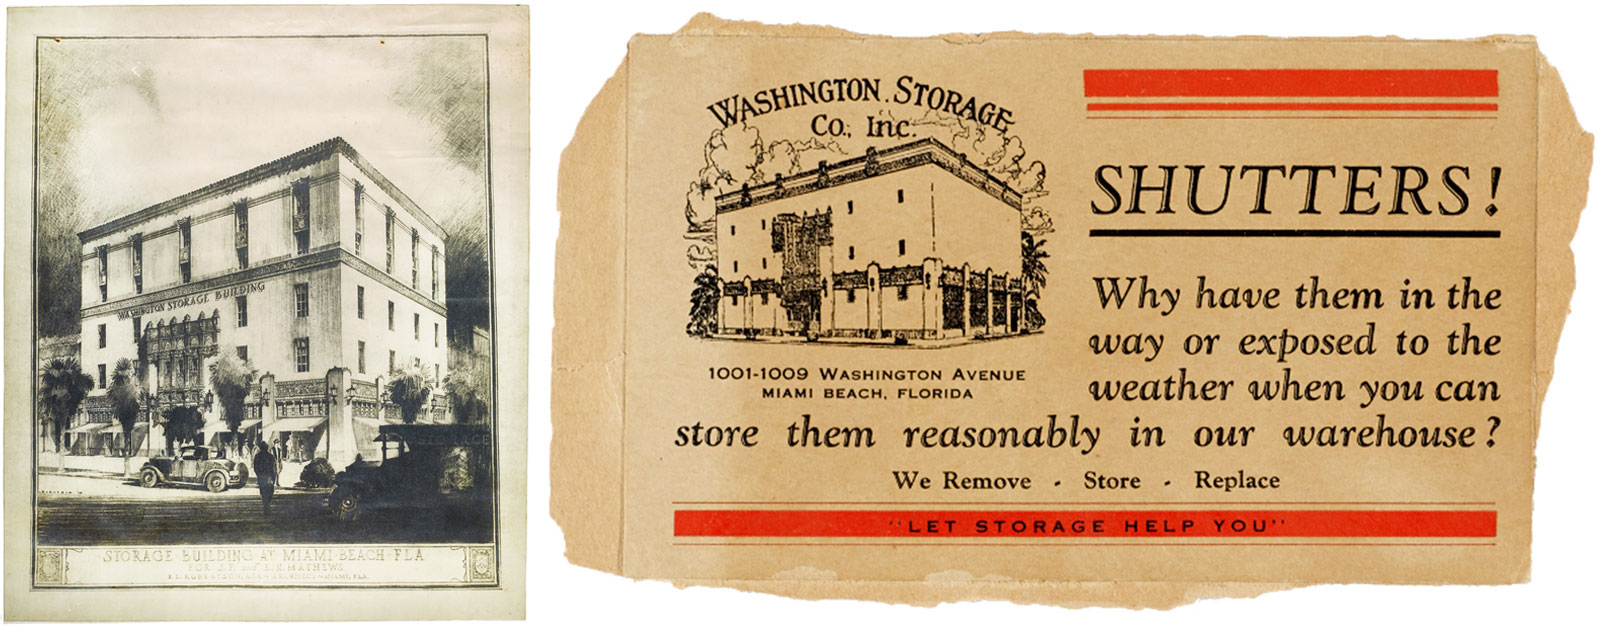 Washington Storage Company